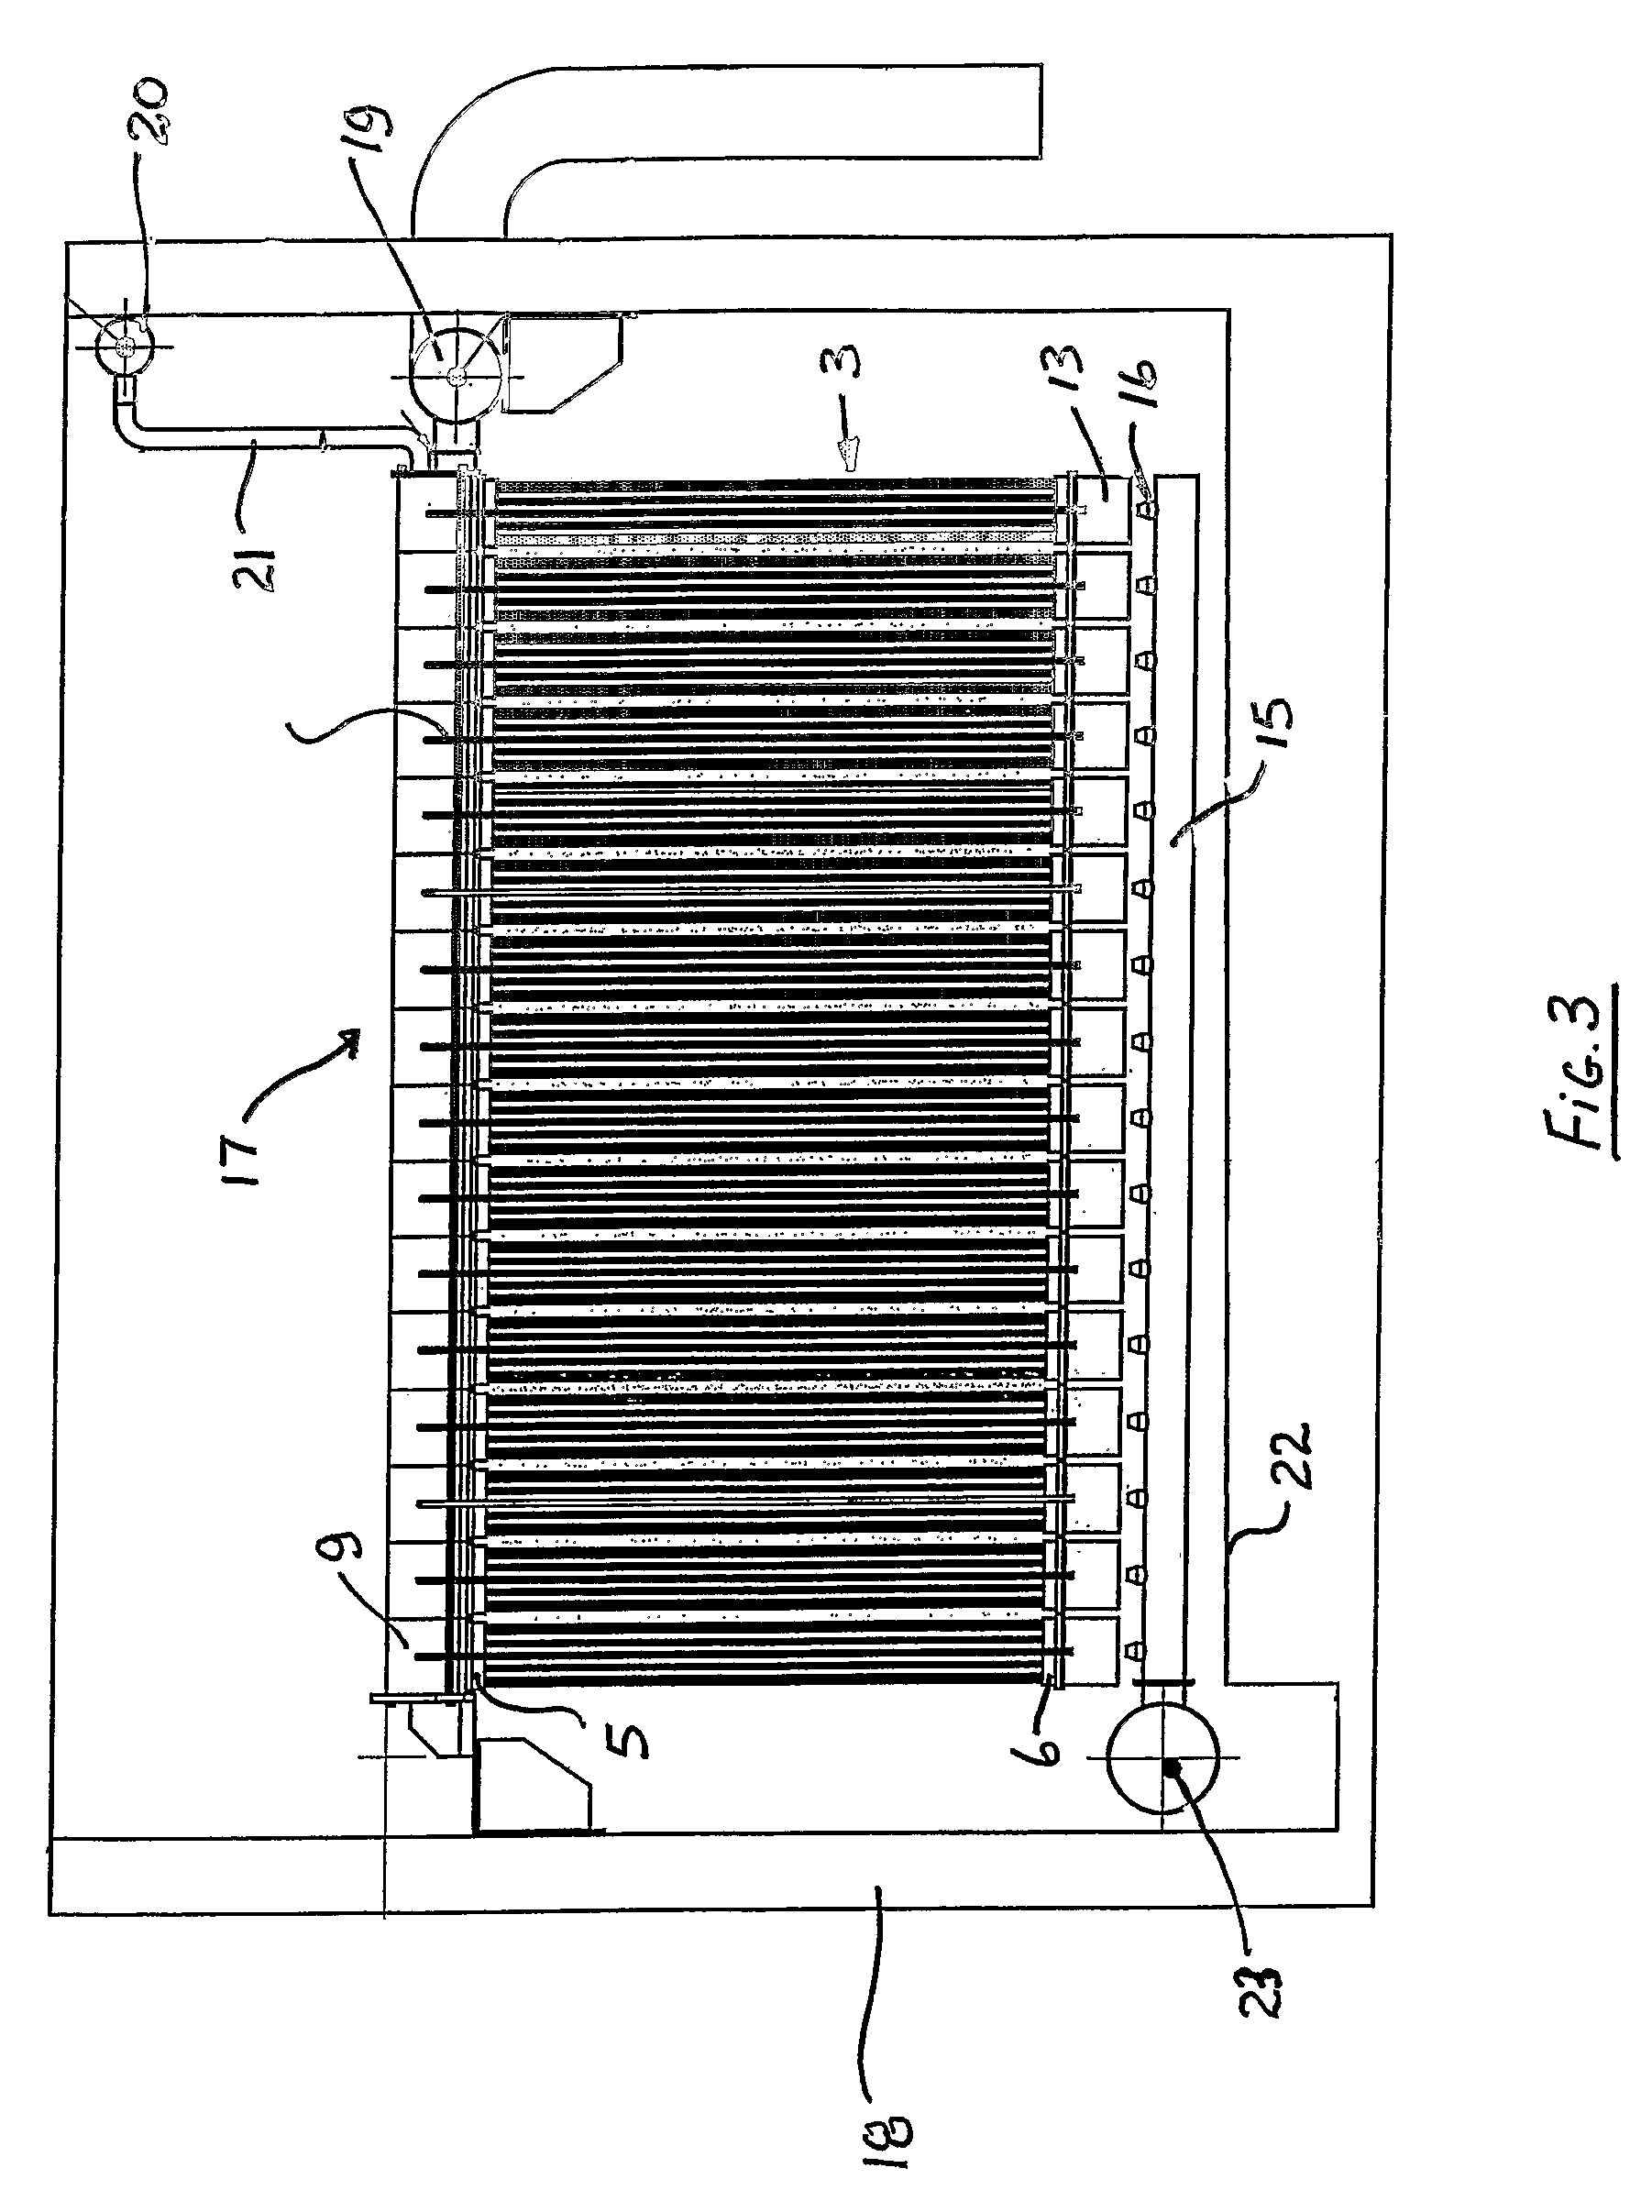 Square membrane manifold system